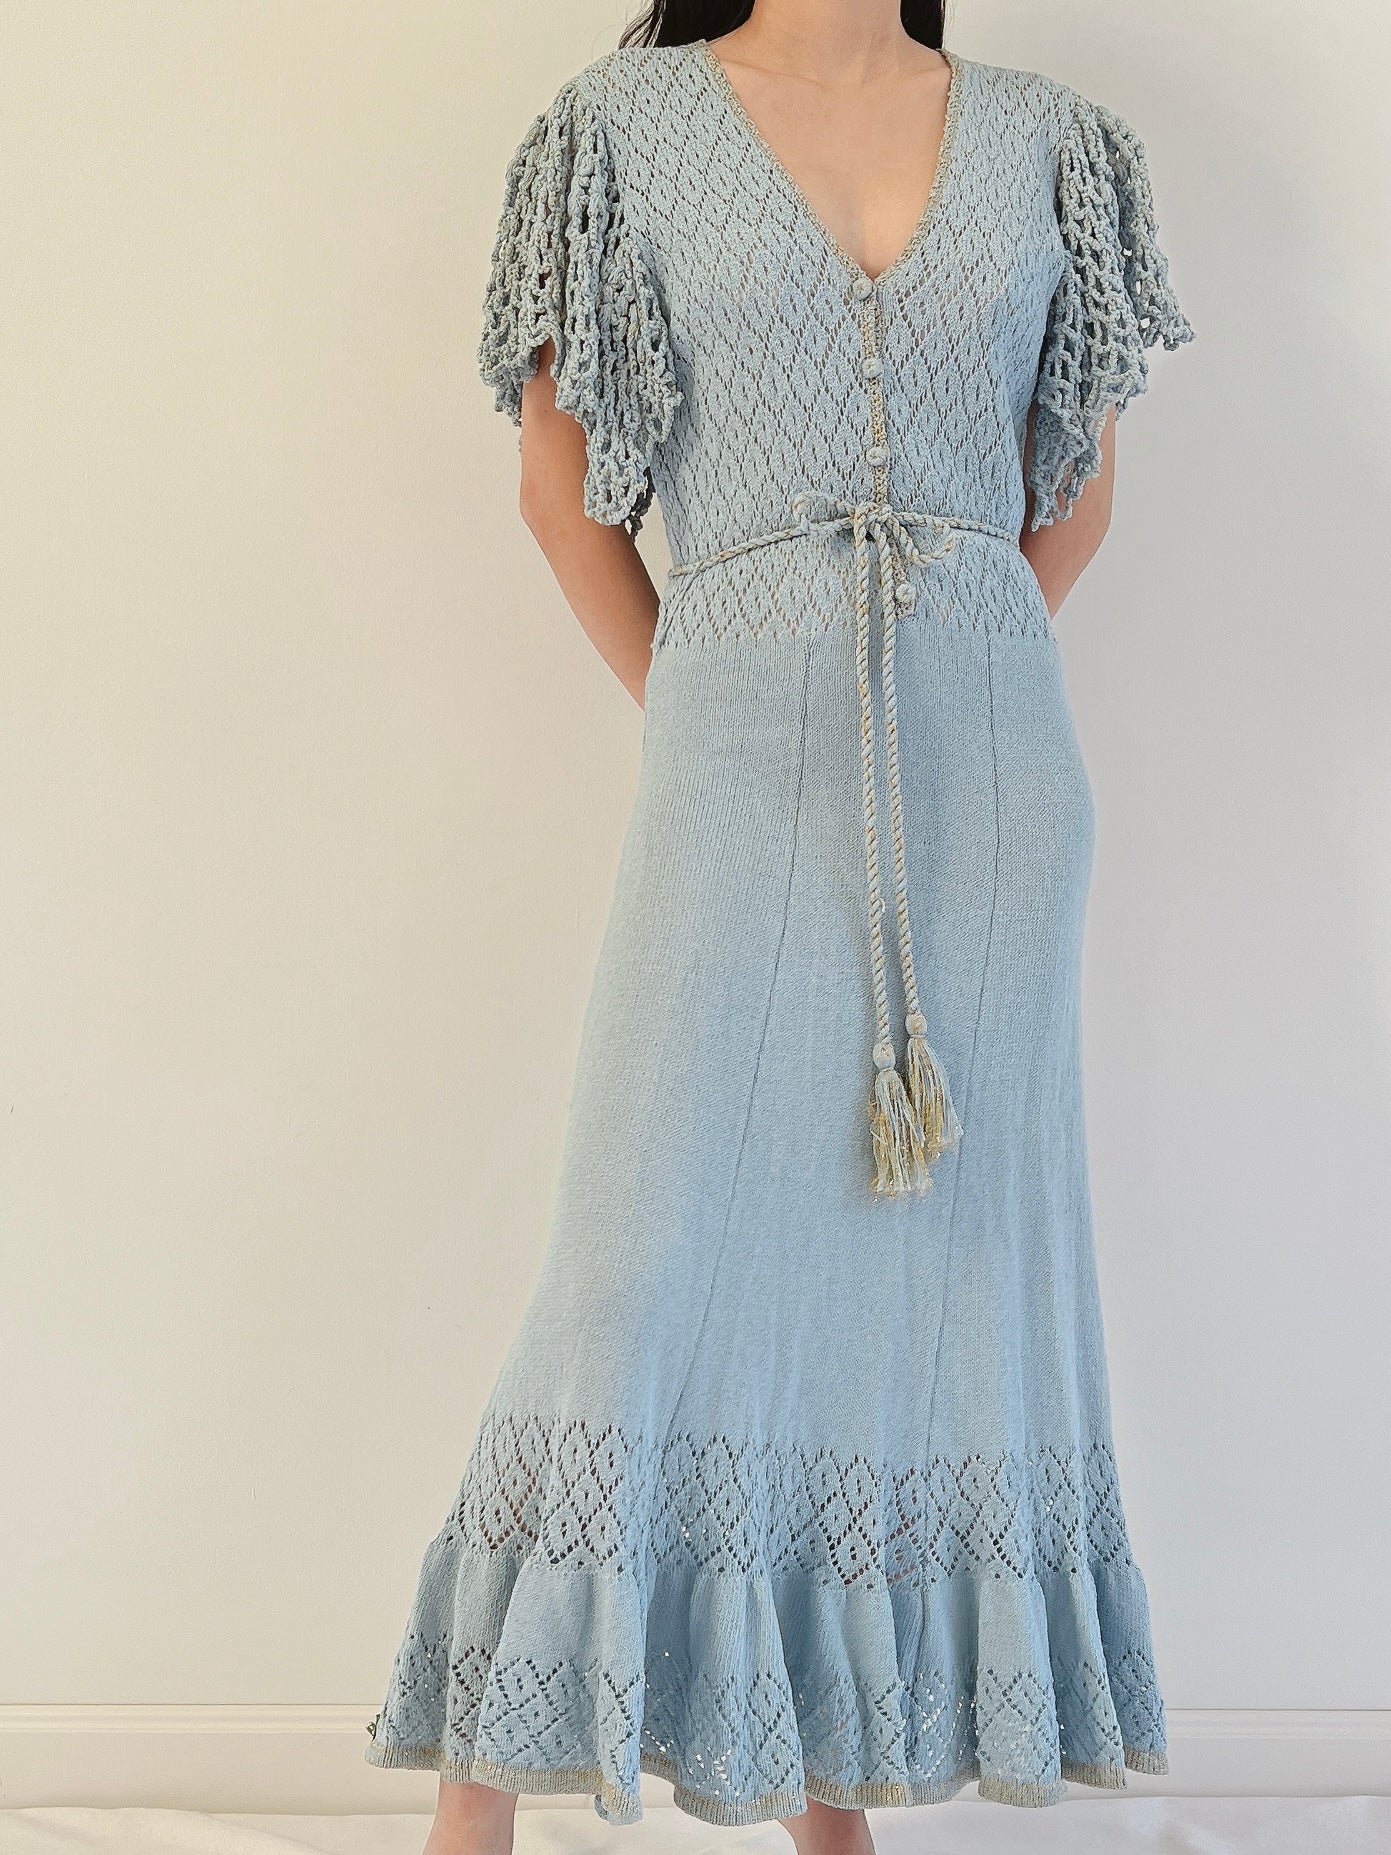 1970s Flutter Sleeves Crochet Dress - XS-M